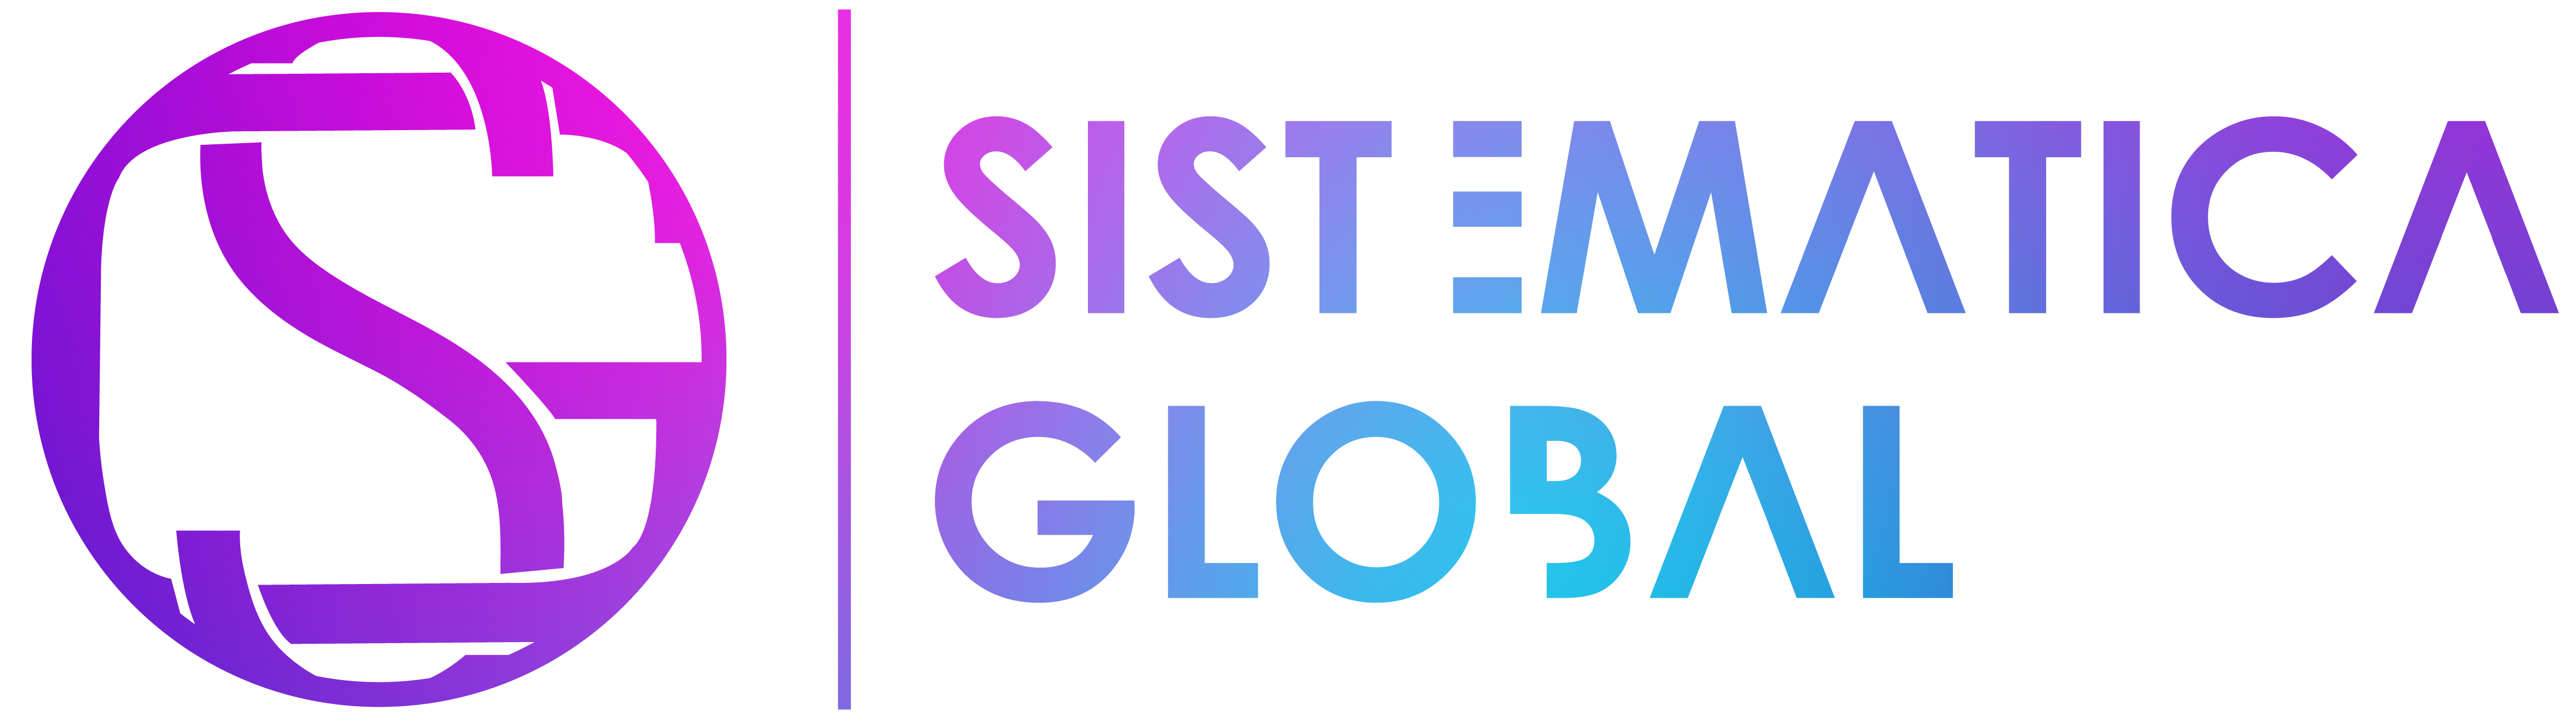 Sistematica Global